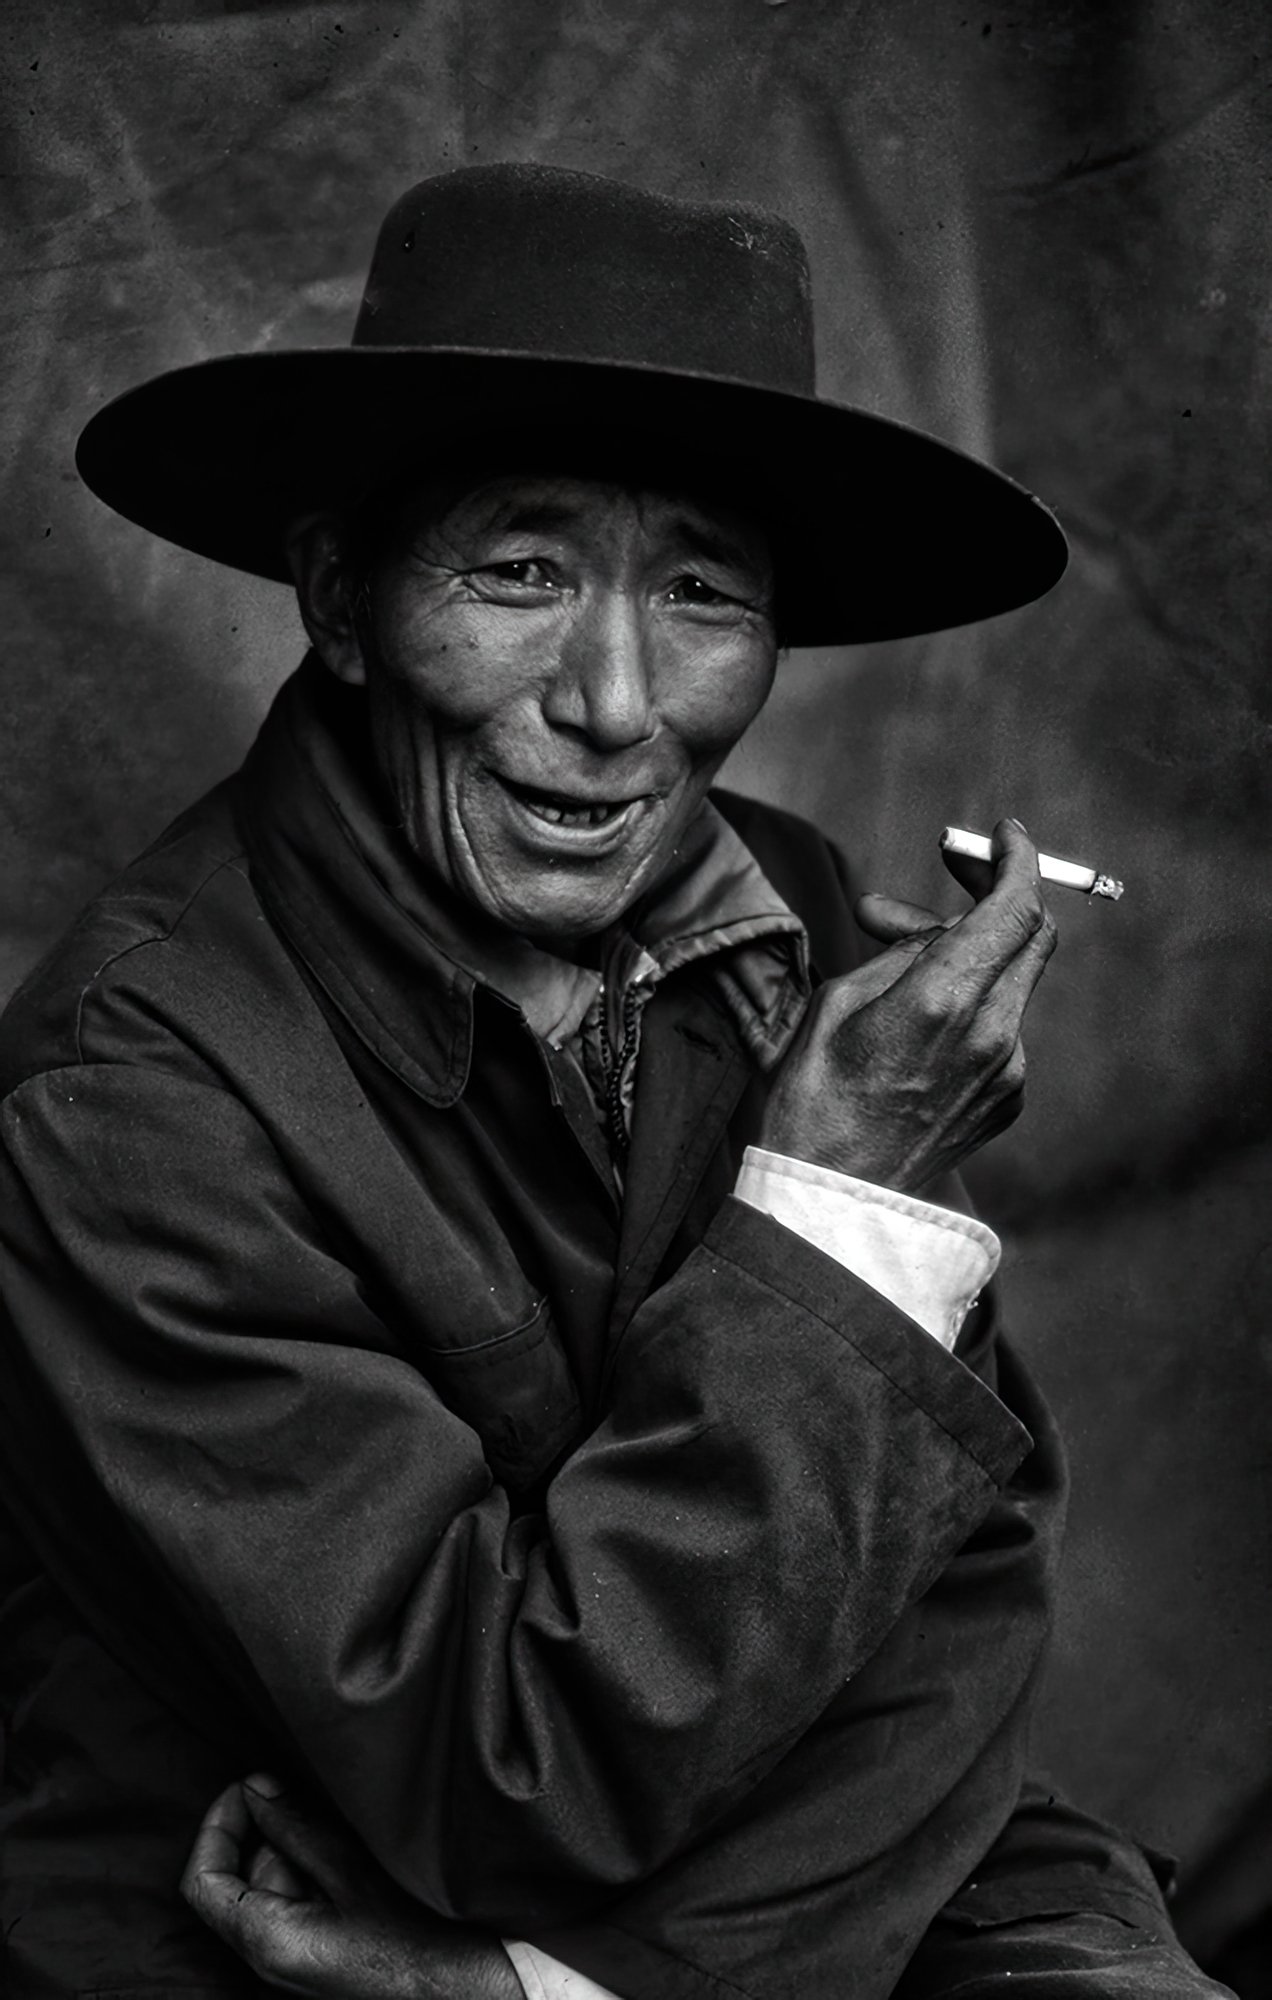 Tibet portrait of a Tibetan man smoking.jpg